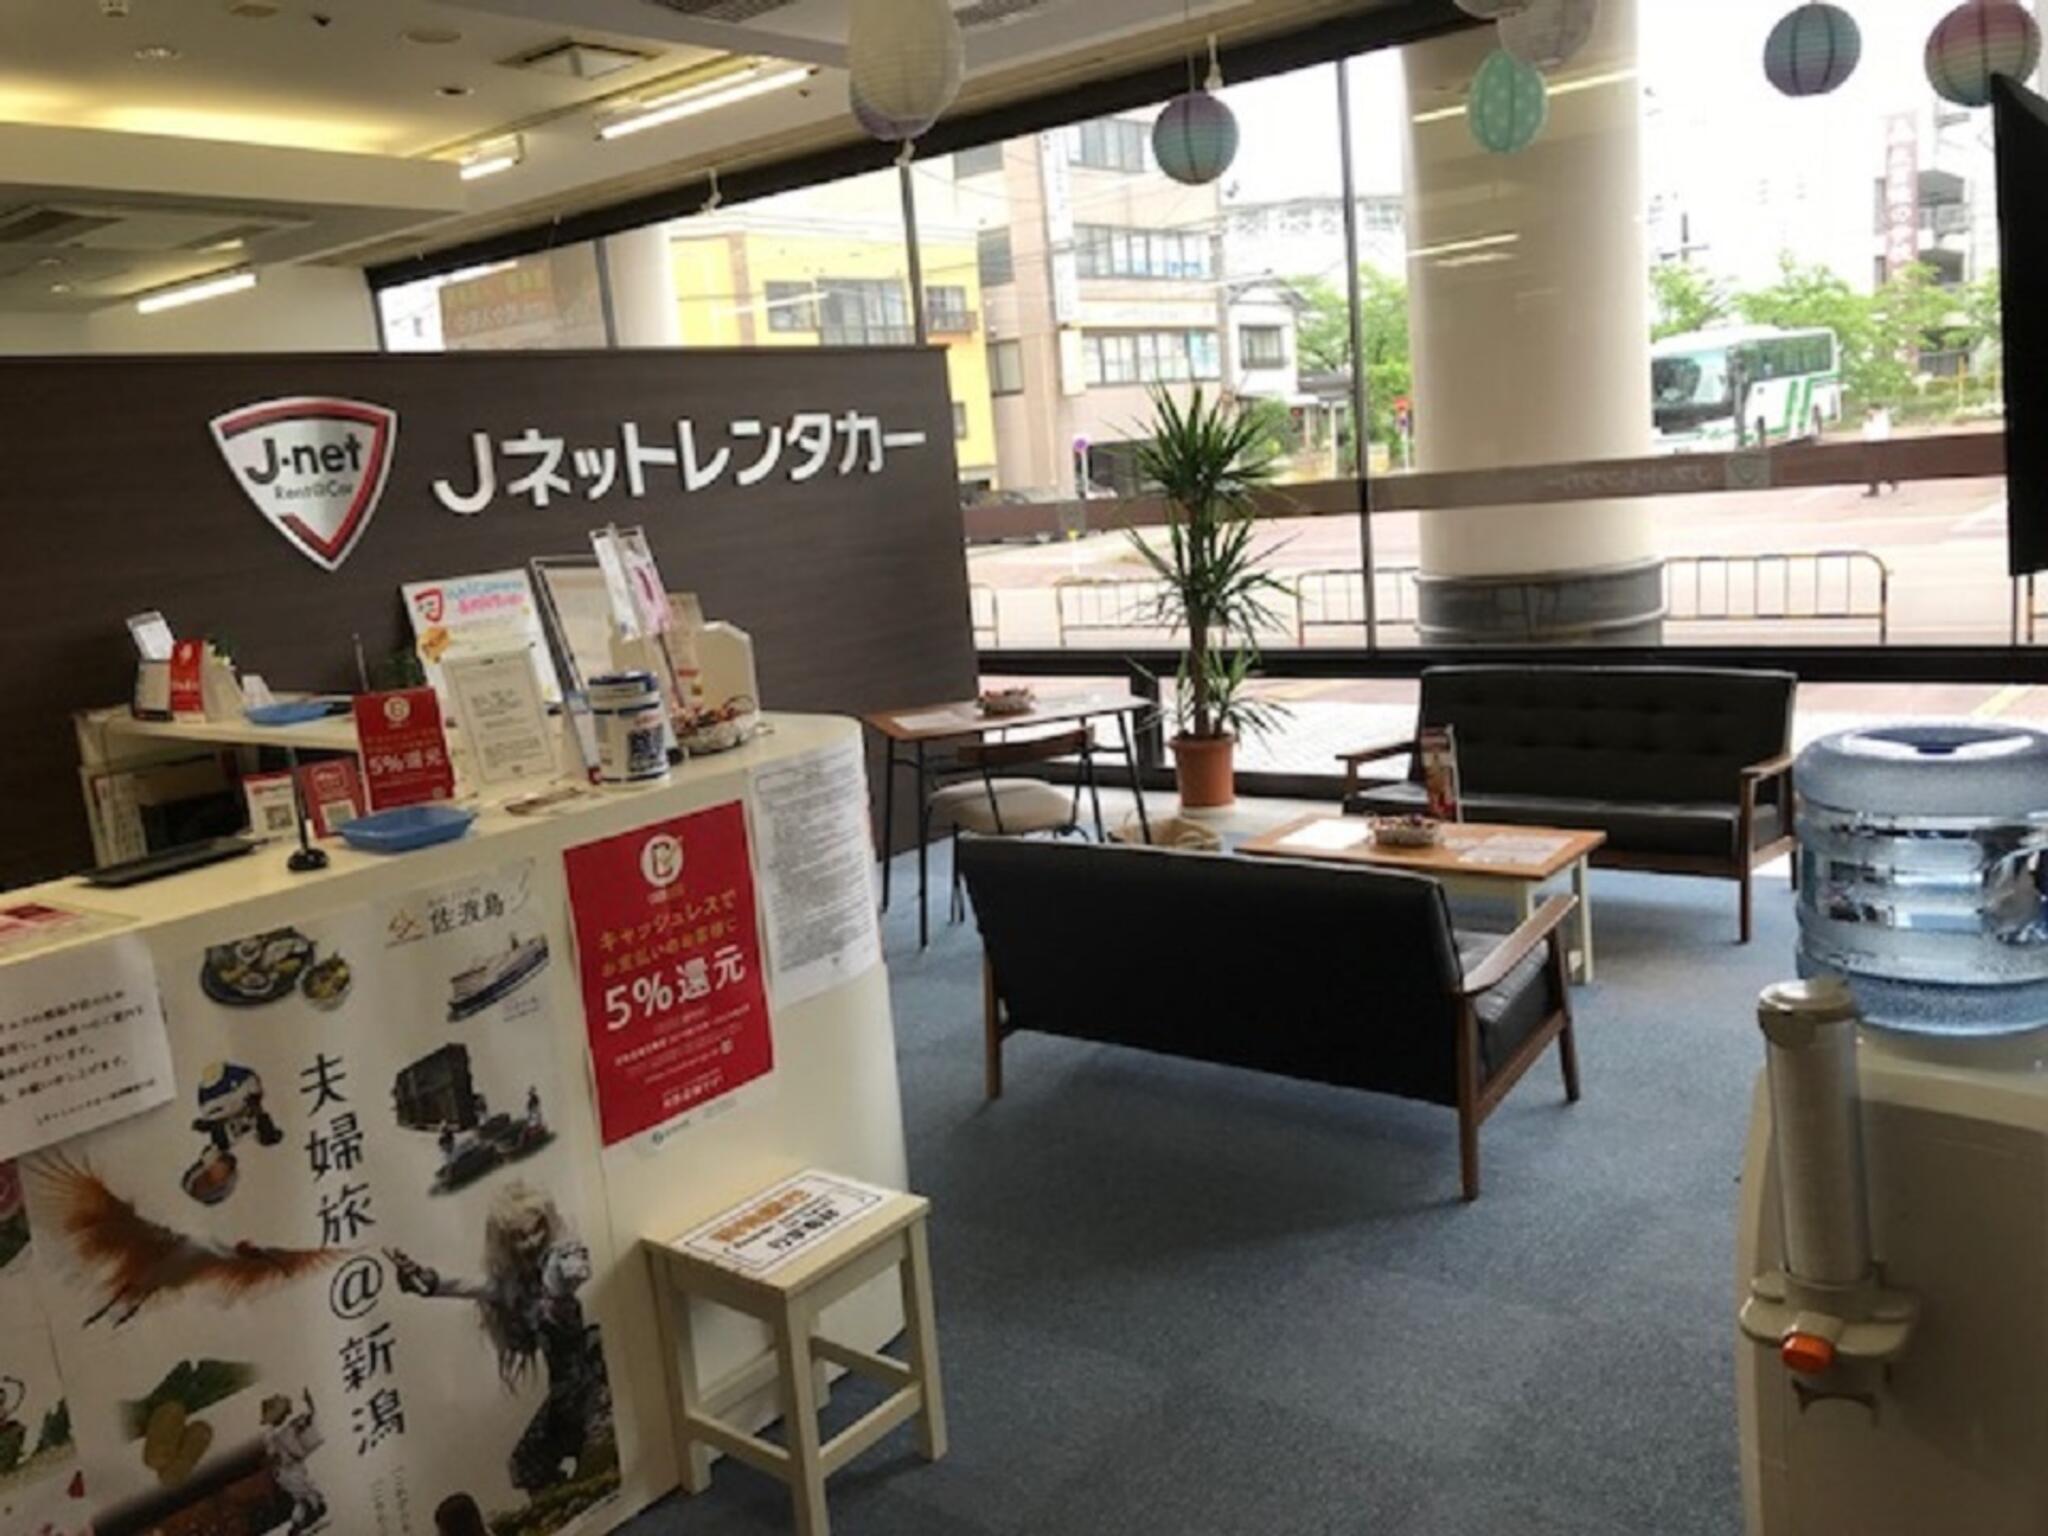 Jネットレンタカー長岡駅東口店の代表写真7